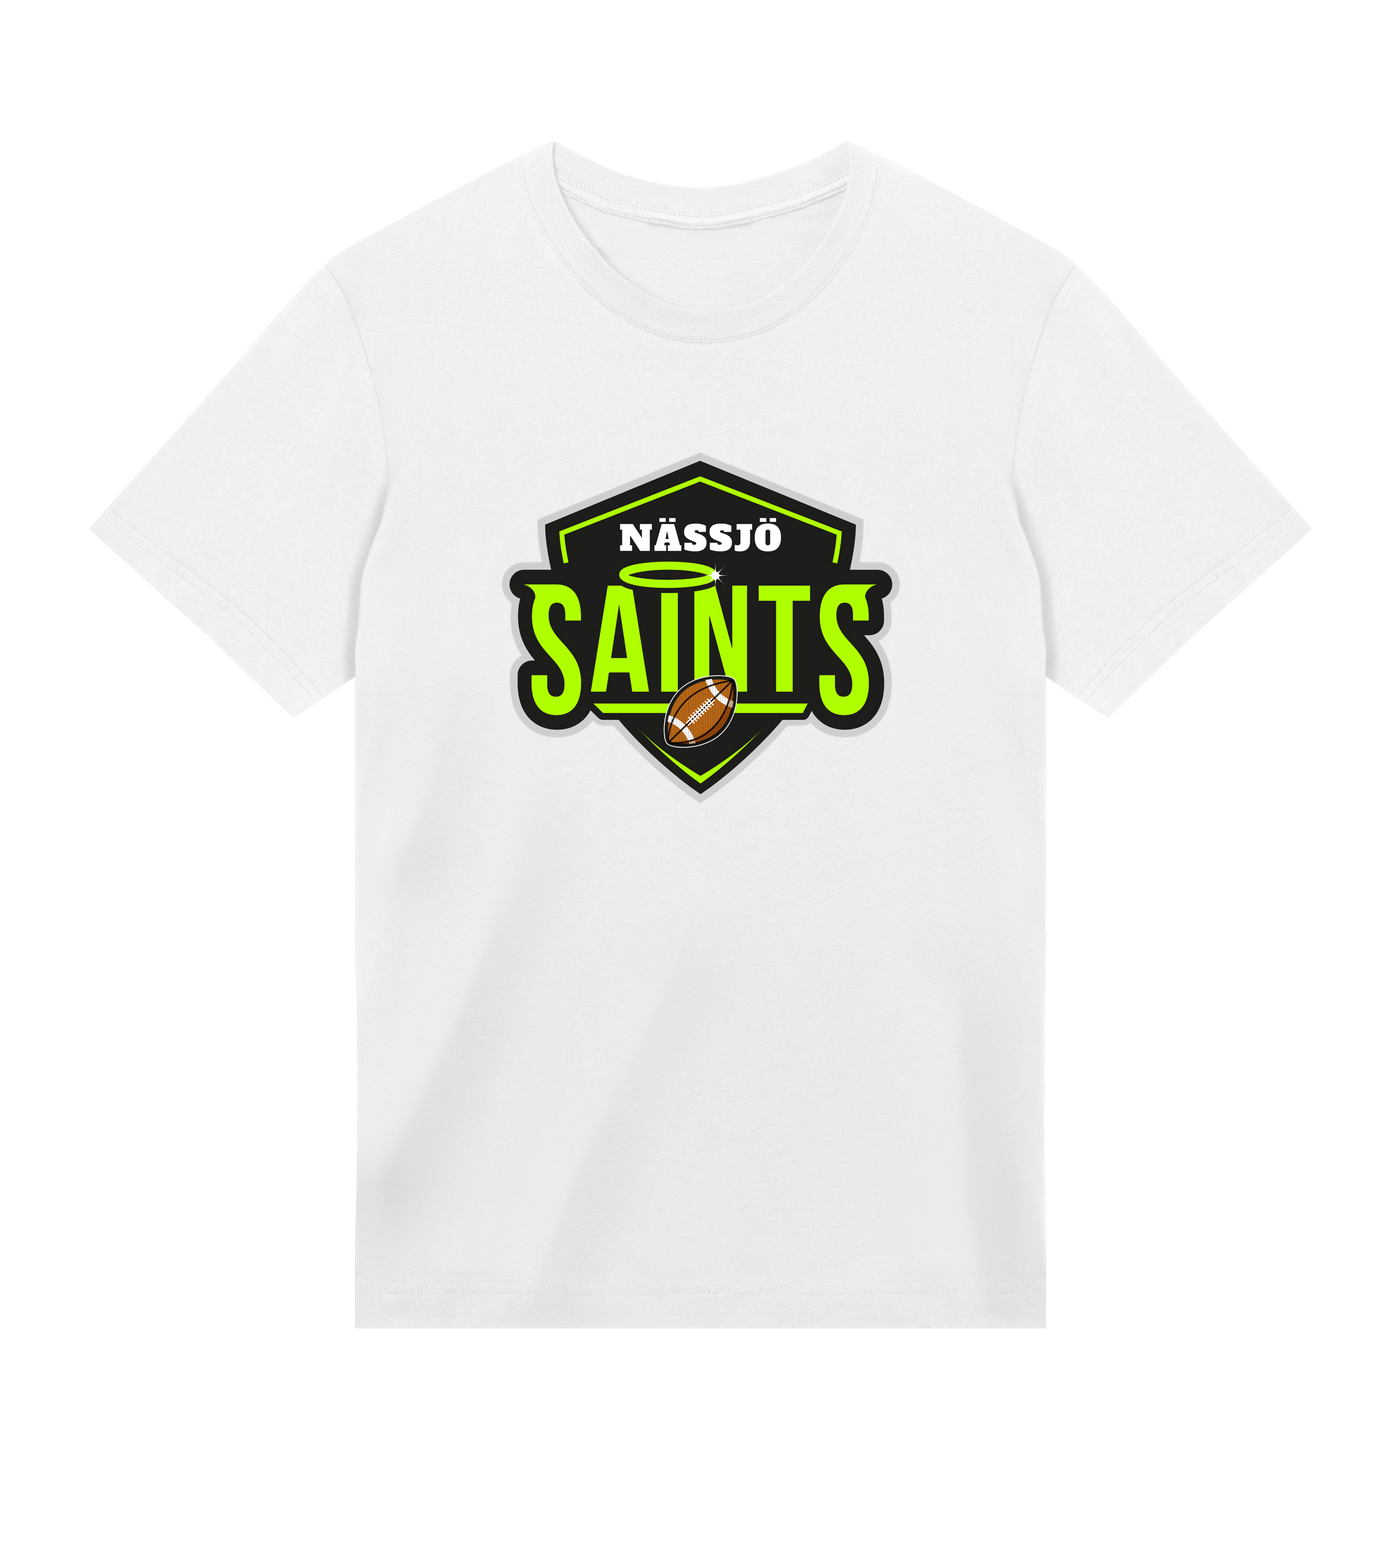 Nässjö Saints Tee - Premium t-shirt from REYRR STUDIO - Shop now at Reyrr Athletics